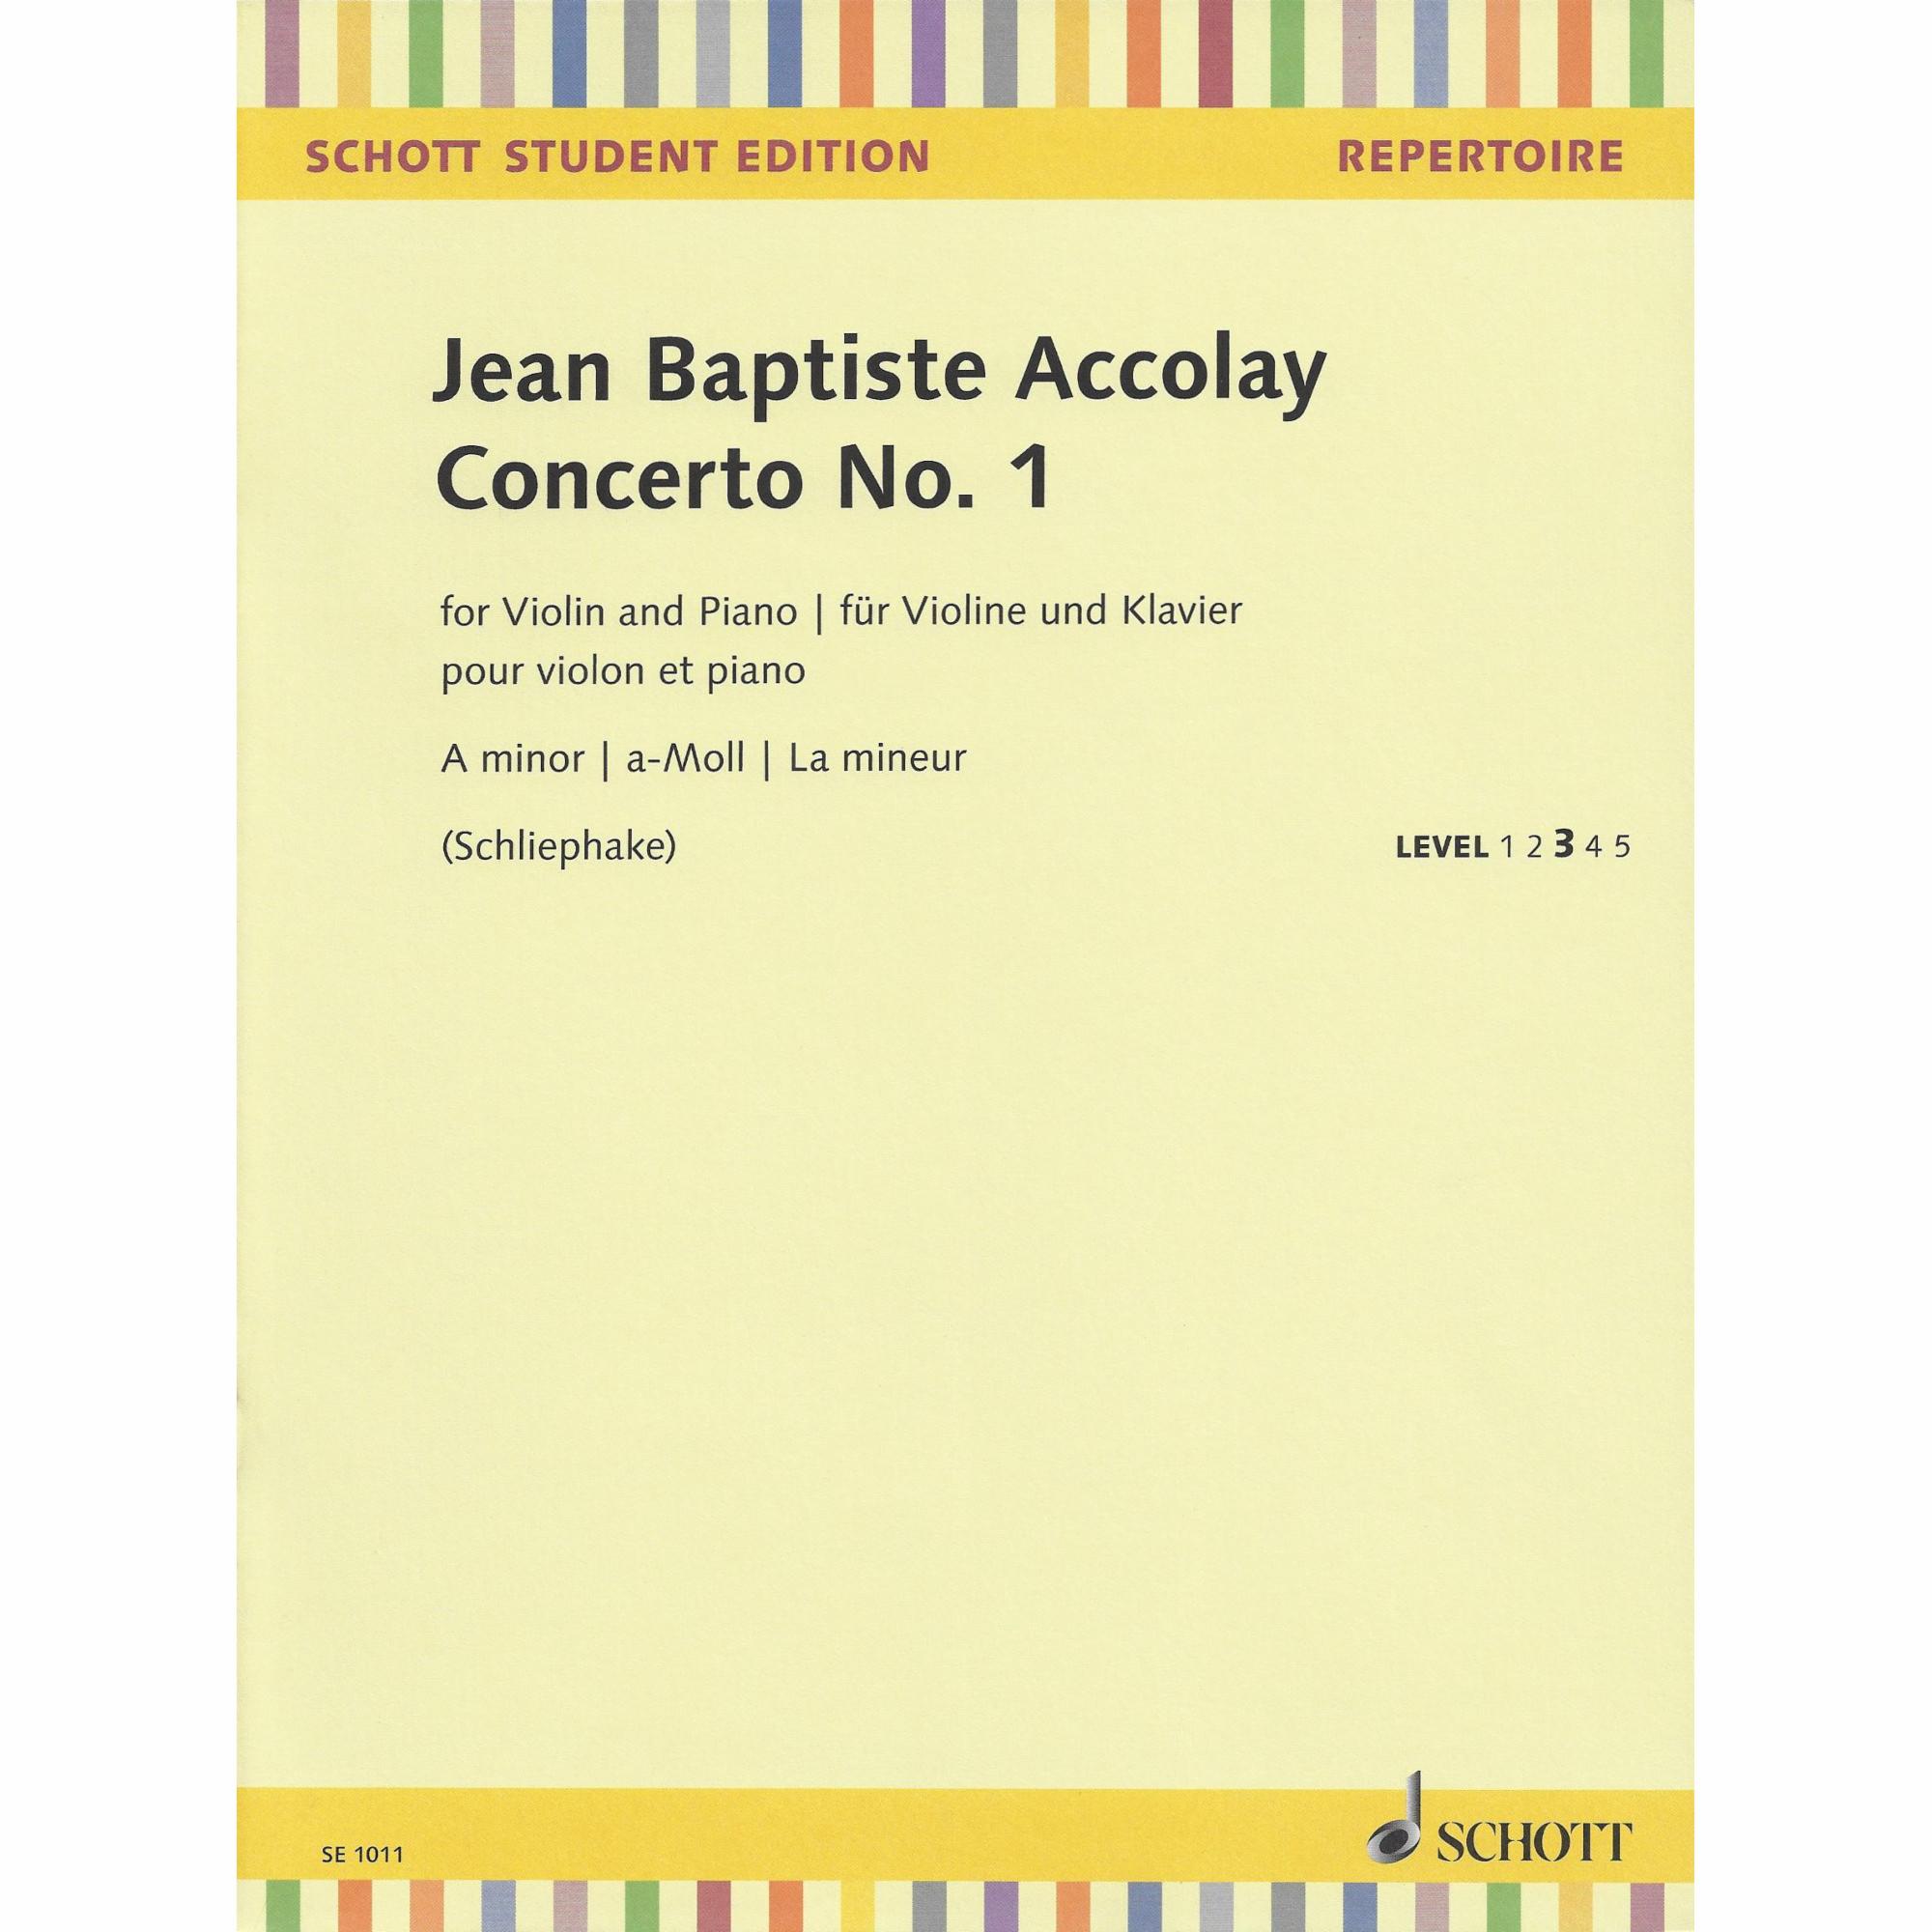 Accolay -- Concerto No. 1 in A Minor for Violin and Piano